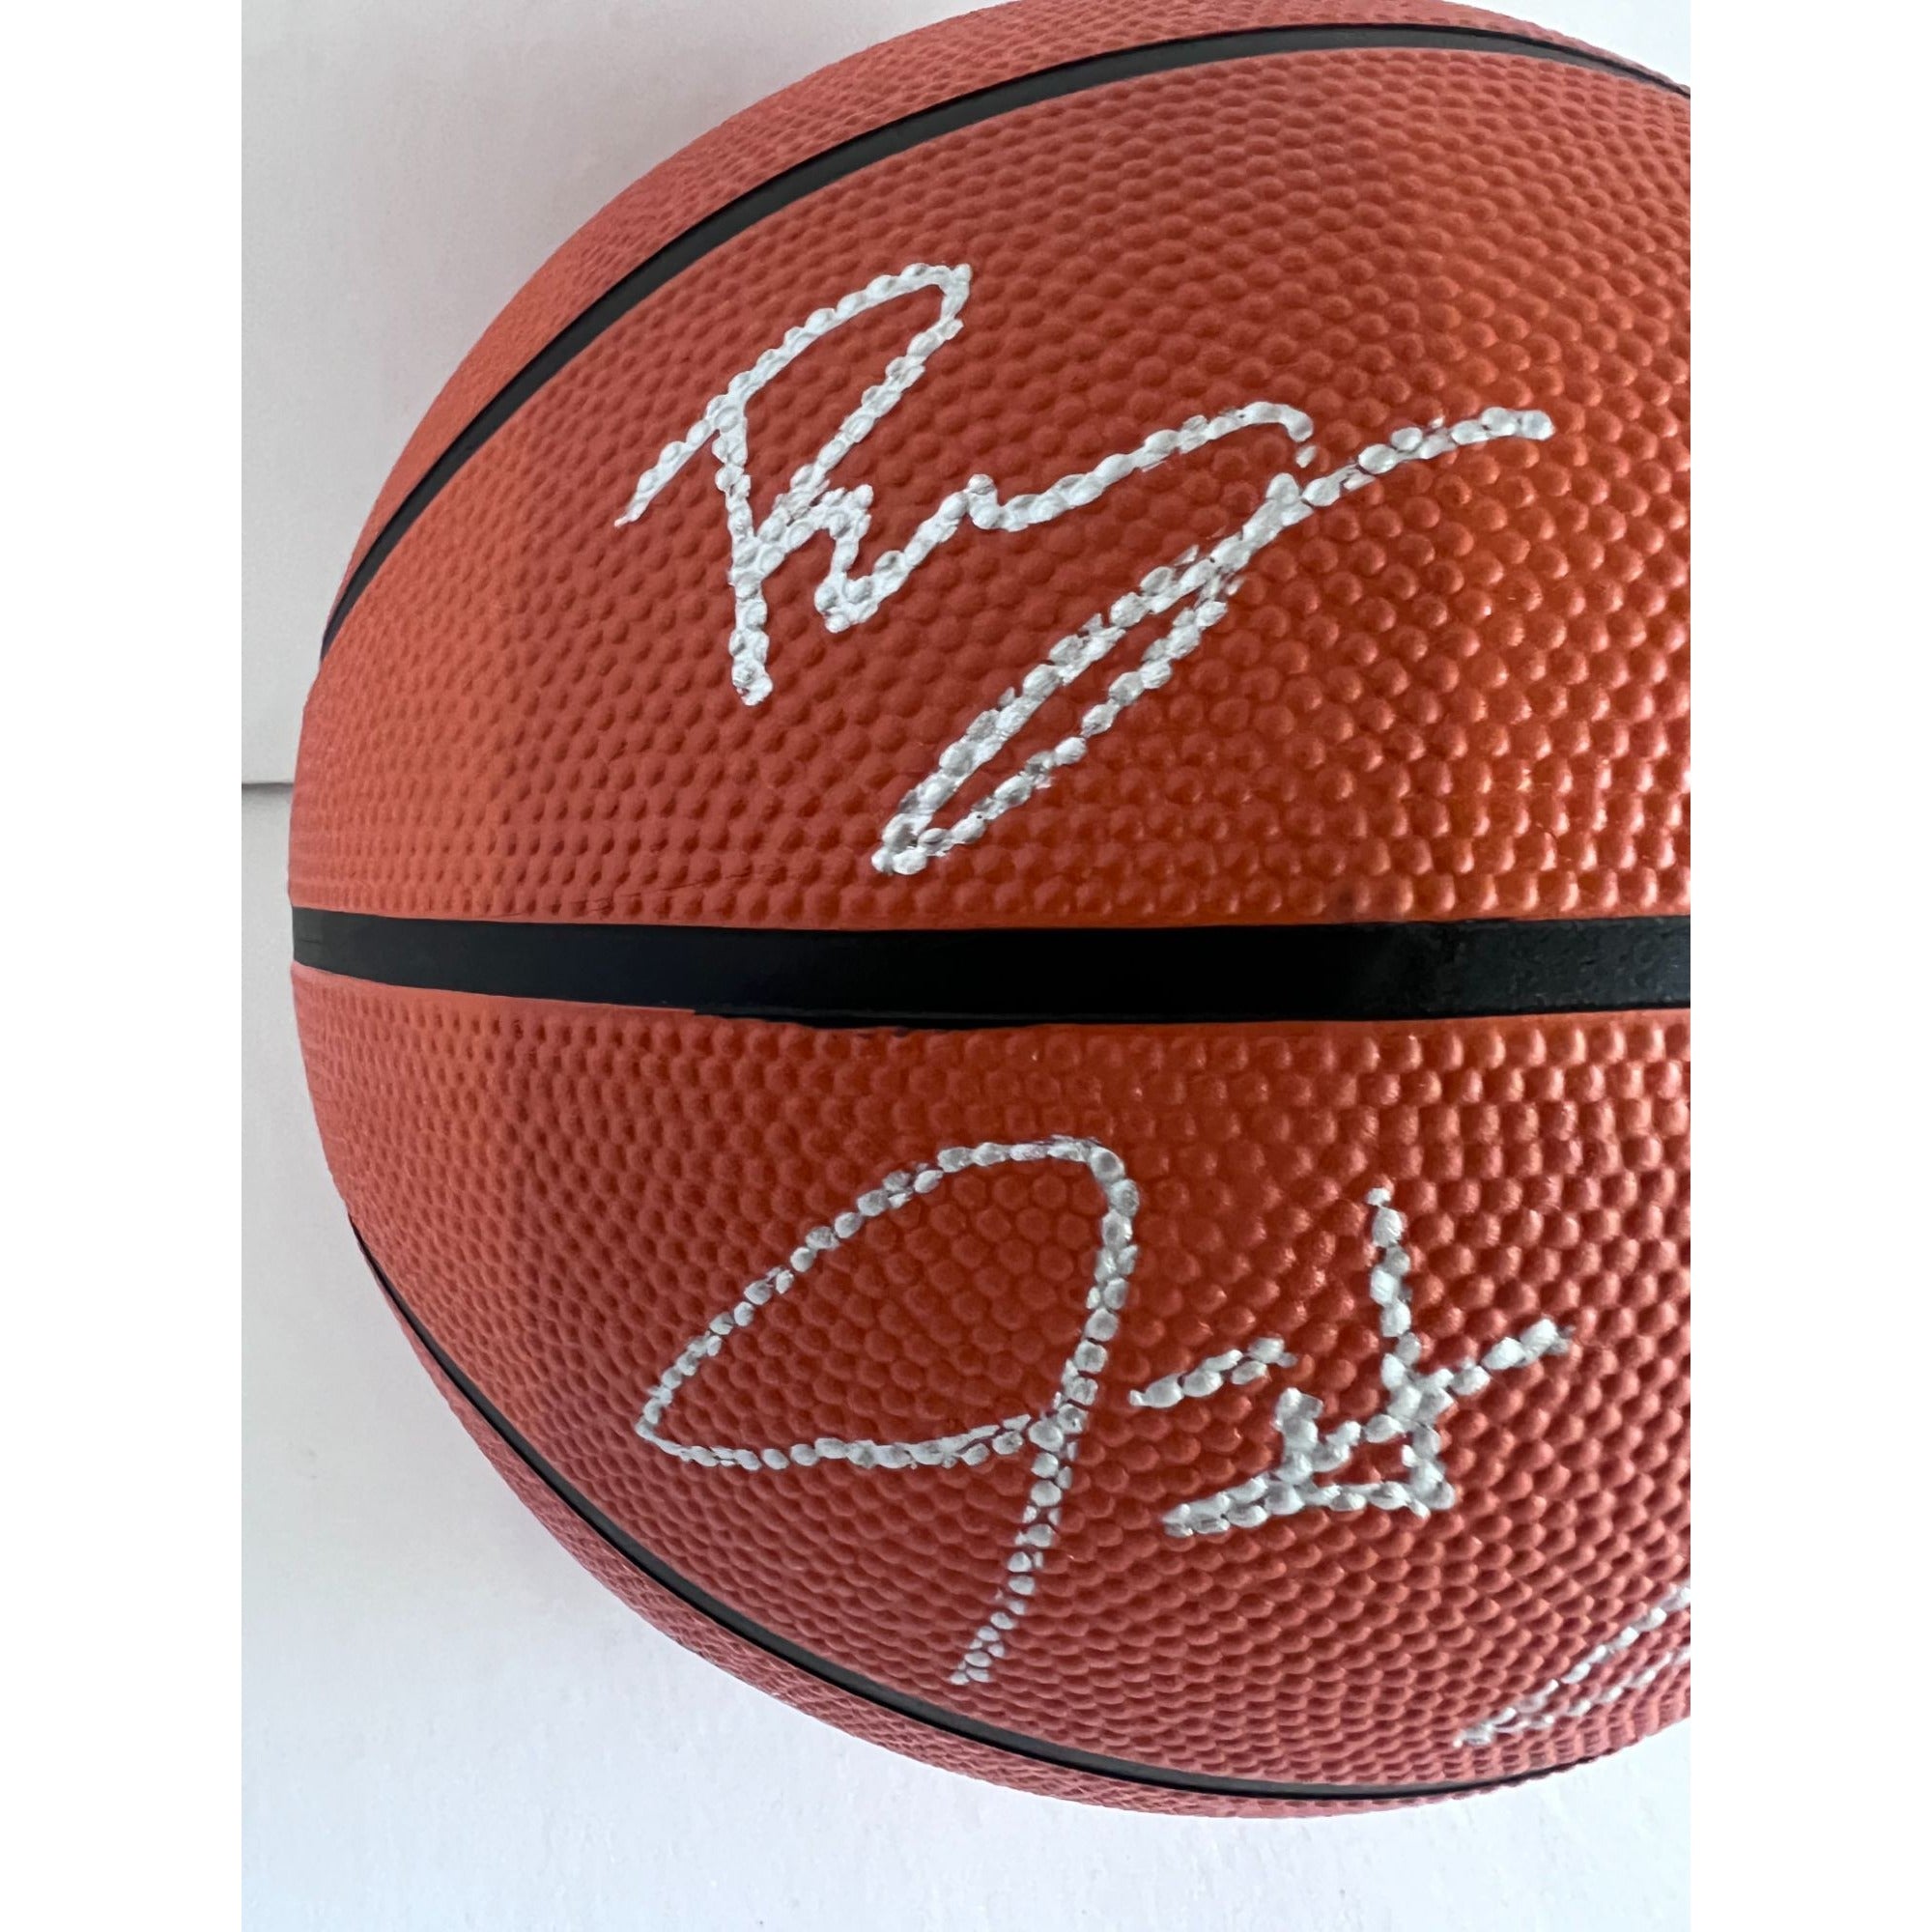 Jayson Tatum, Jrue Holiday, Jaylen Brown, Kristaps Porzingis Boston Celtics Spalding full size basketball signed with proof